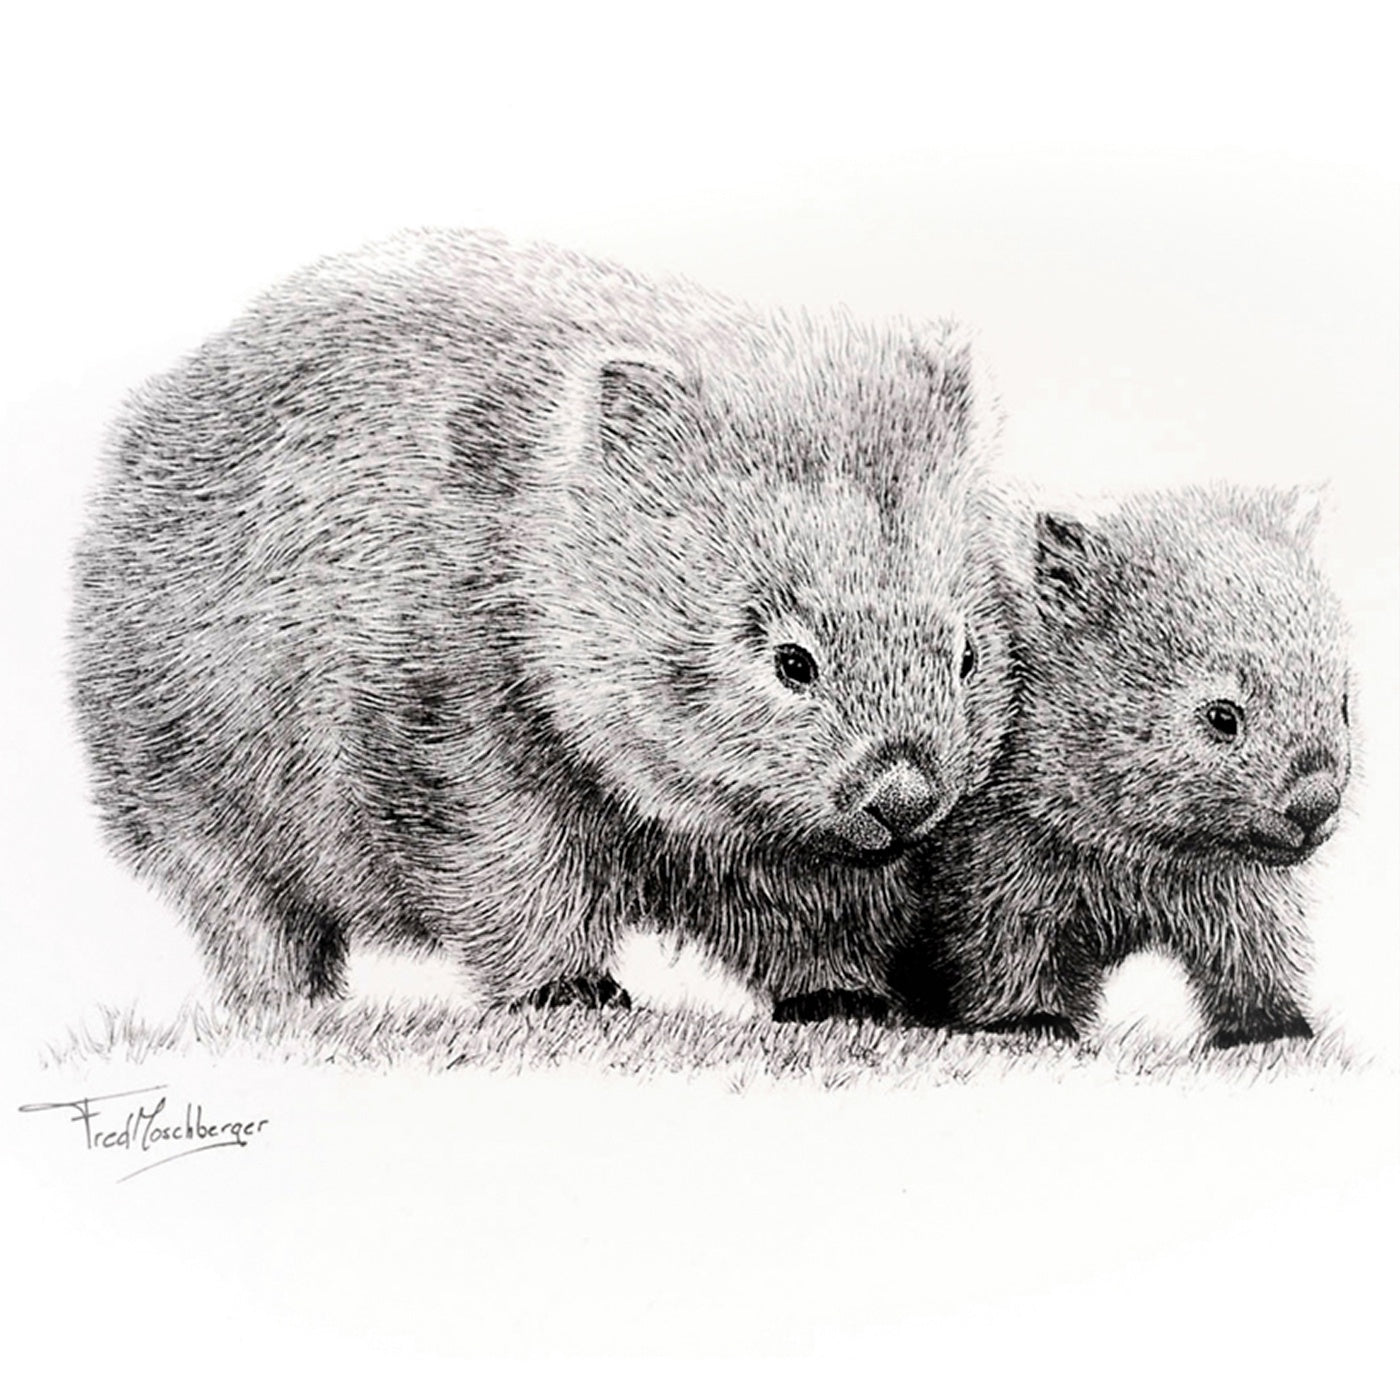 InkStreamArt - Art Print - Wombat Wamble